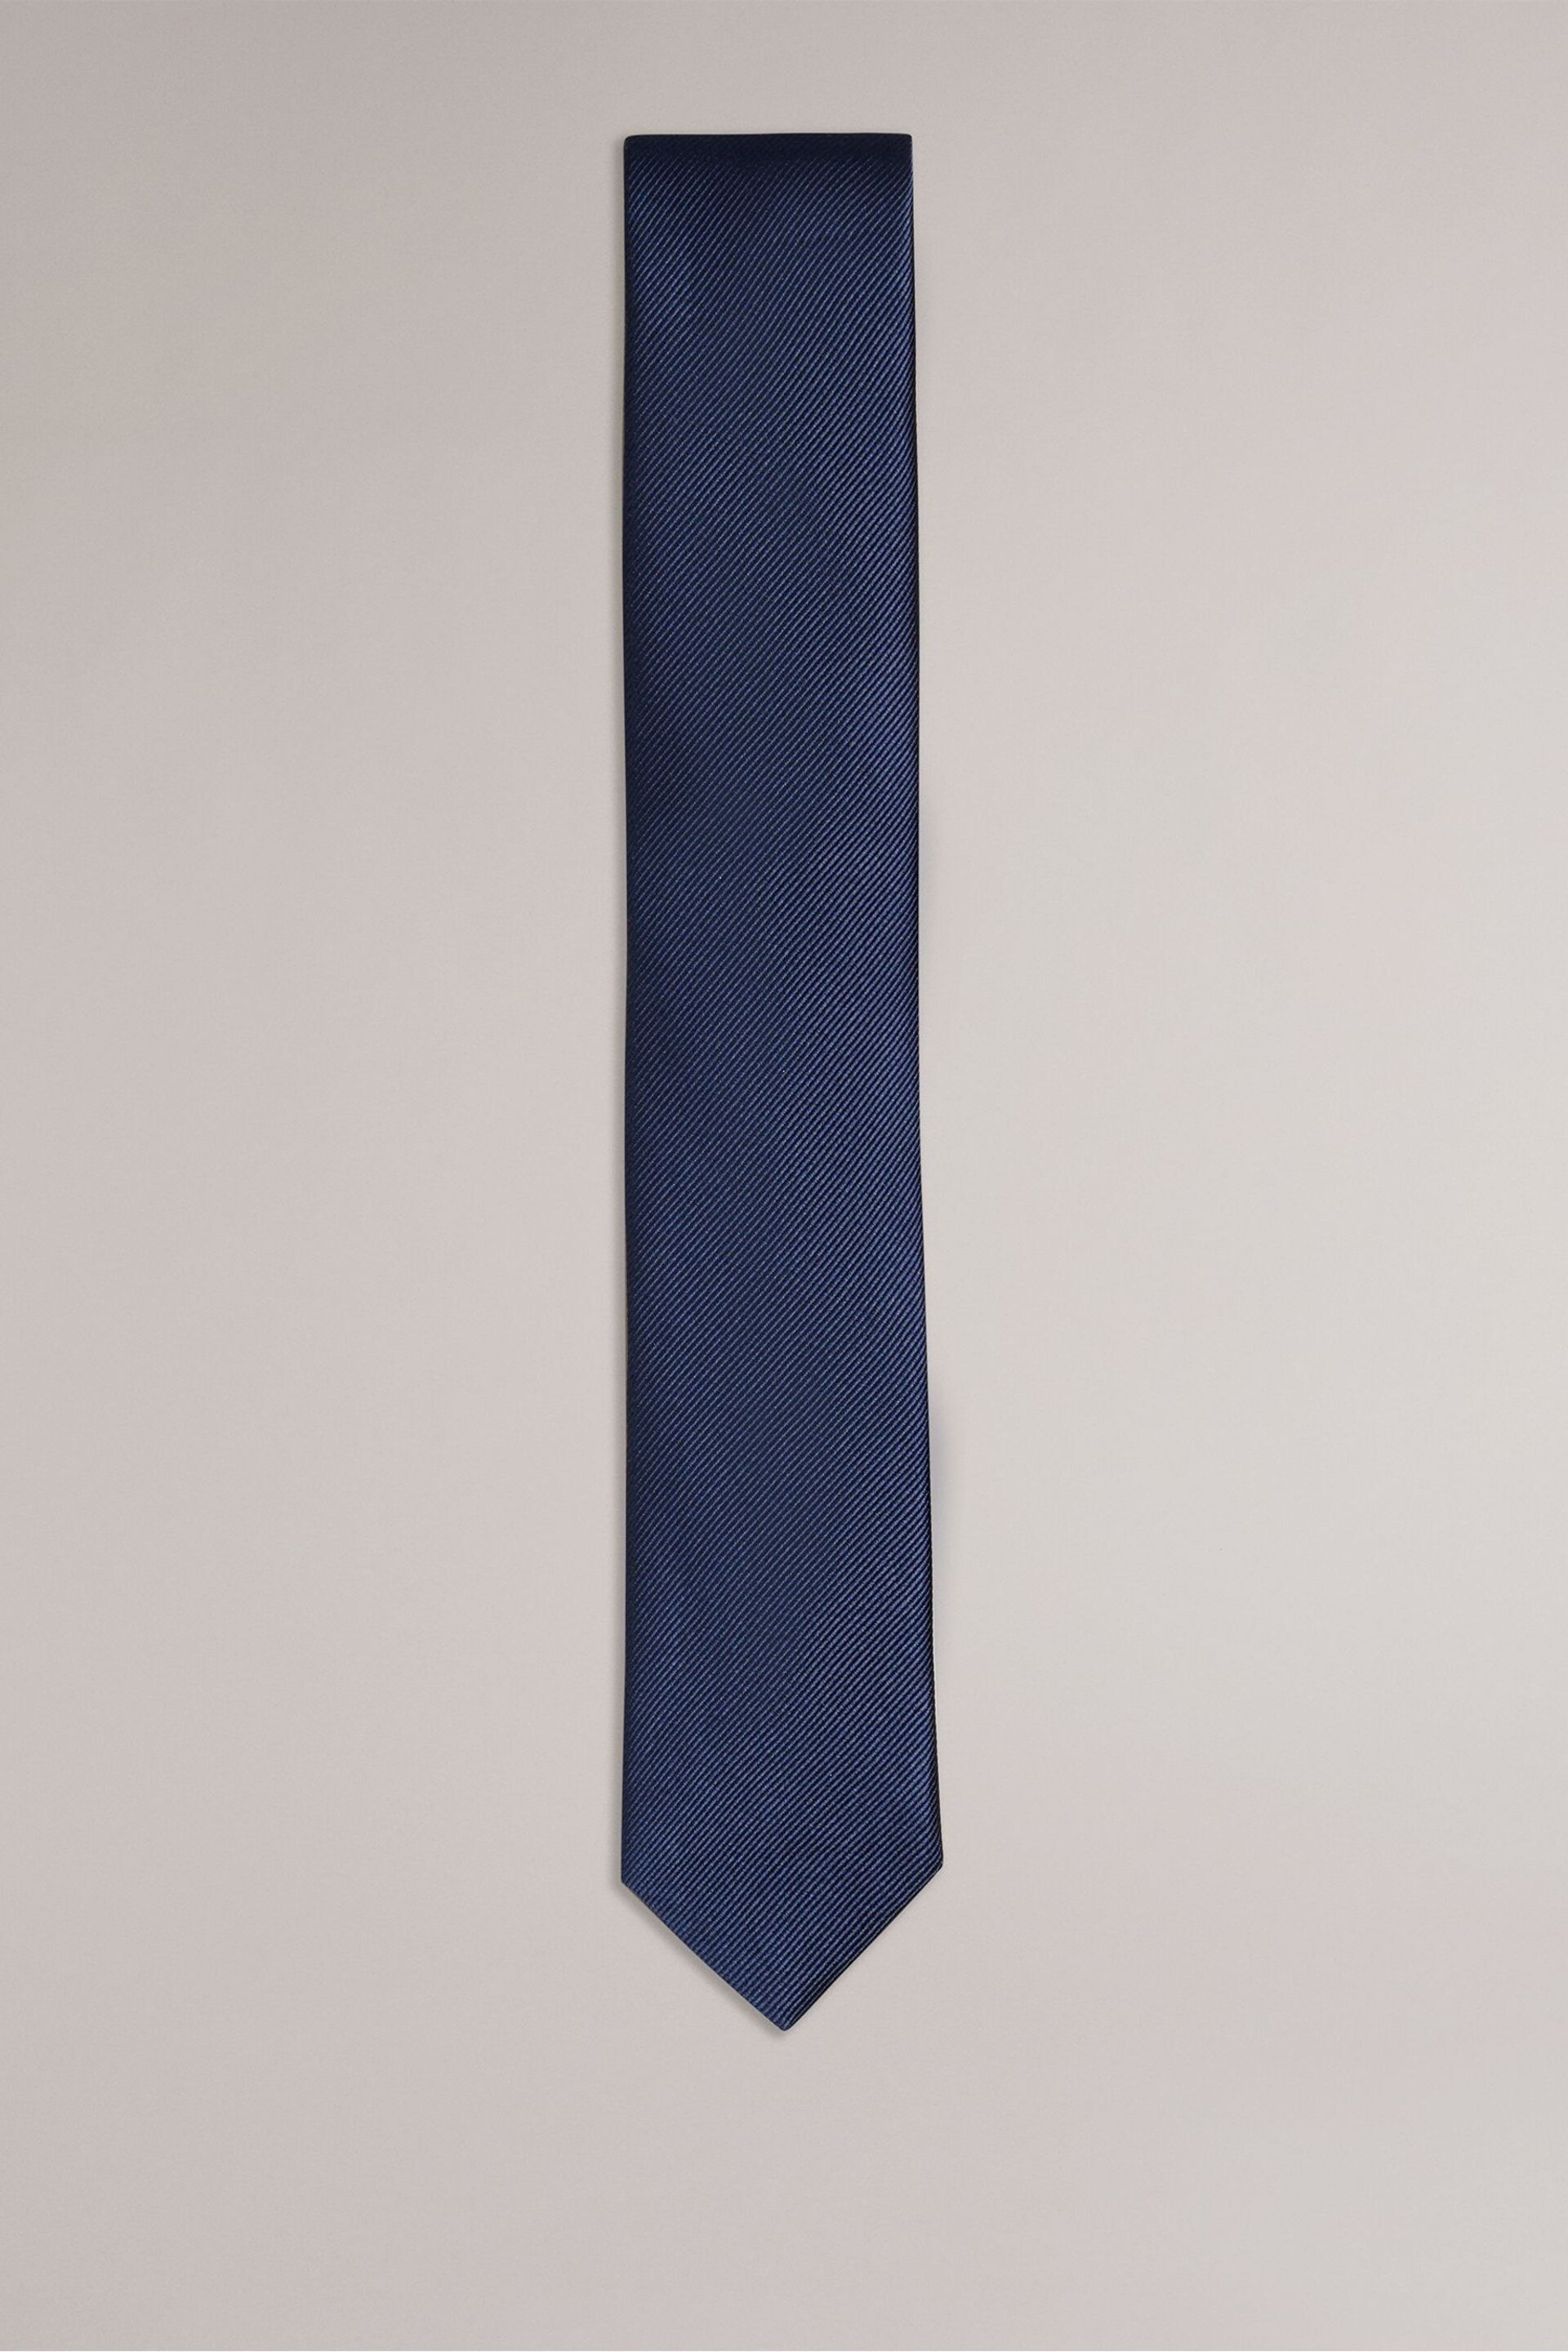 Ted Baker Dark Blue Moorez Ottoman Silk Tie - Image 1 of 4